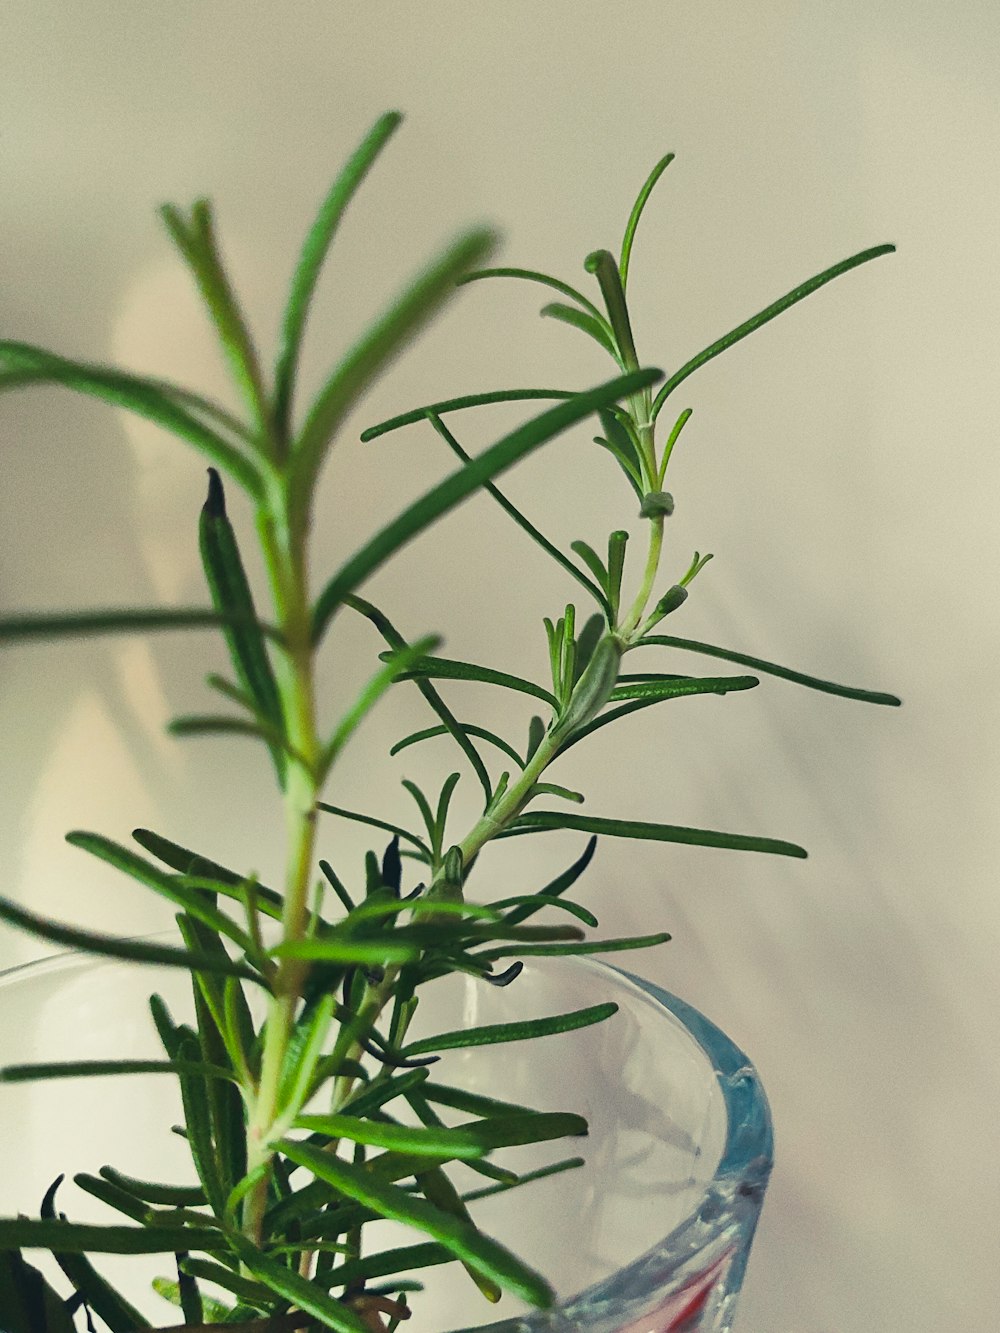 green plant on blue glass vase